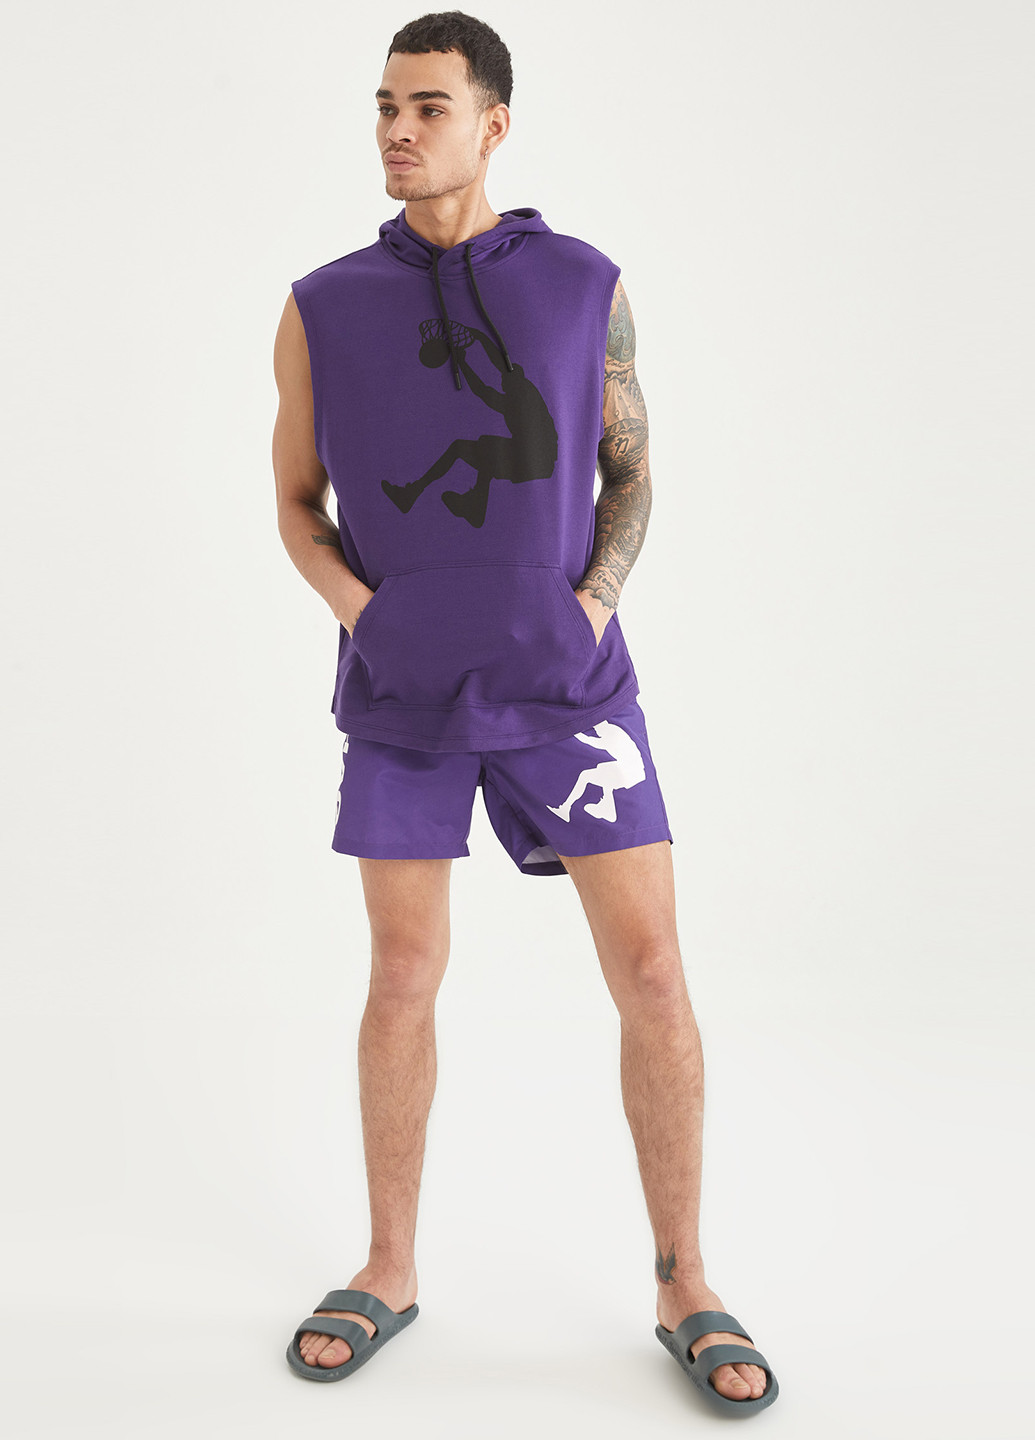 Shaquille O'Neal DeFacto Майка фиолетовая спортивная полиэстер, трикотаж